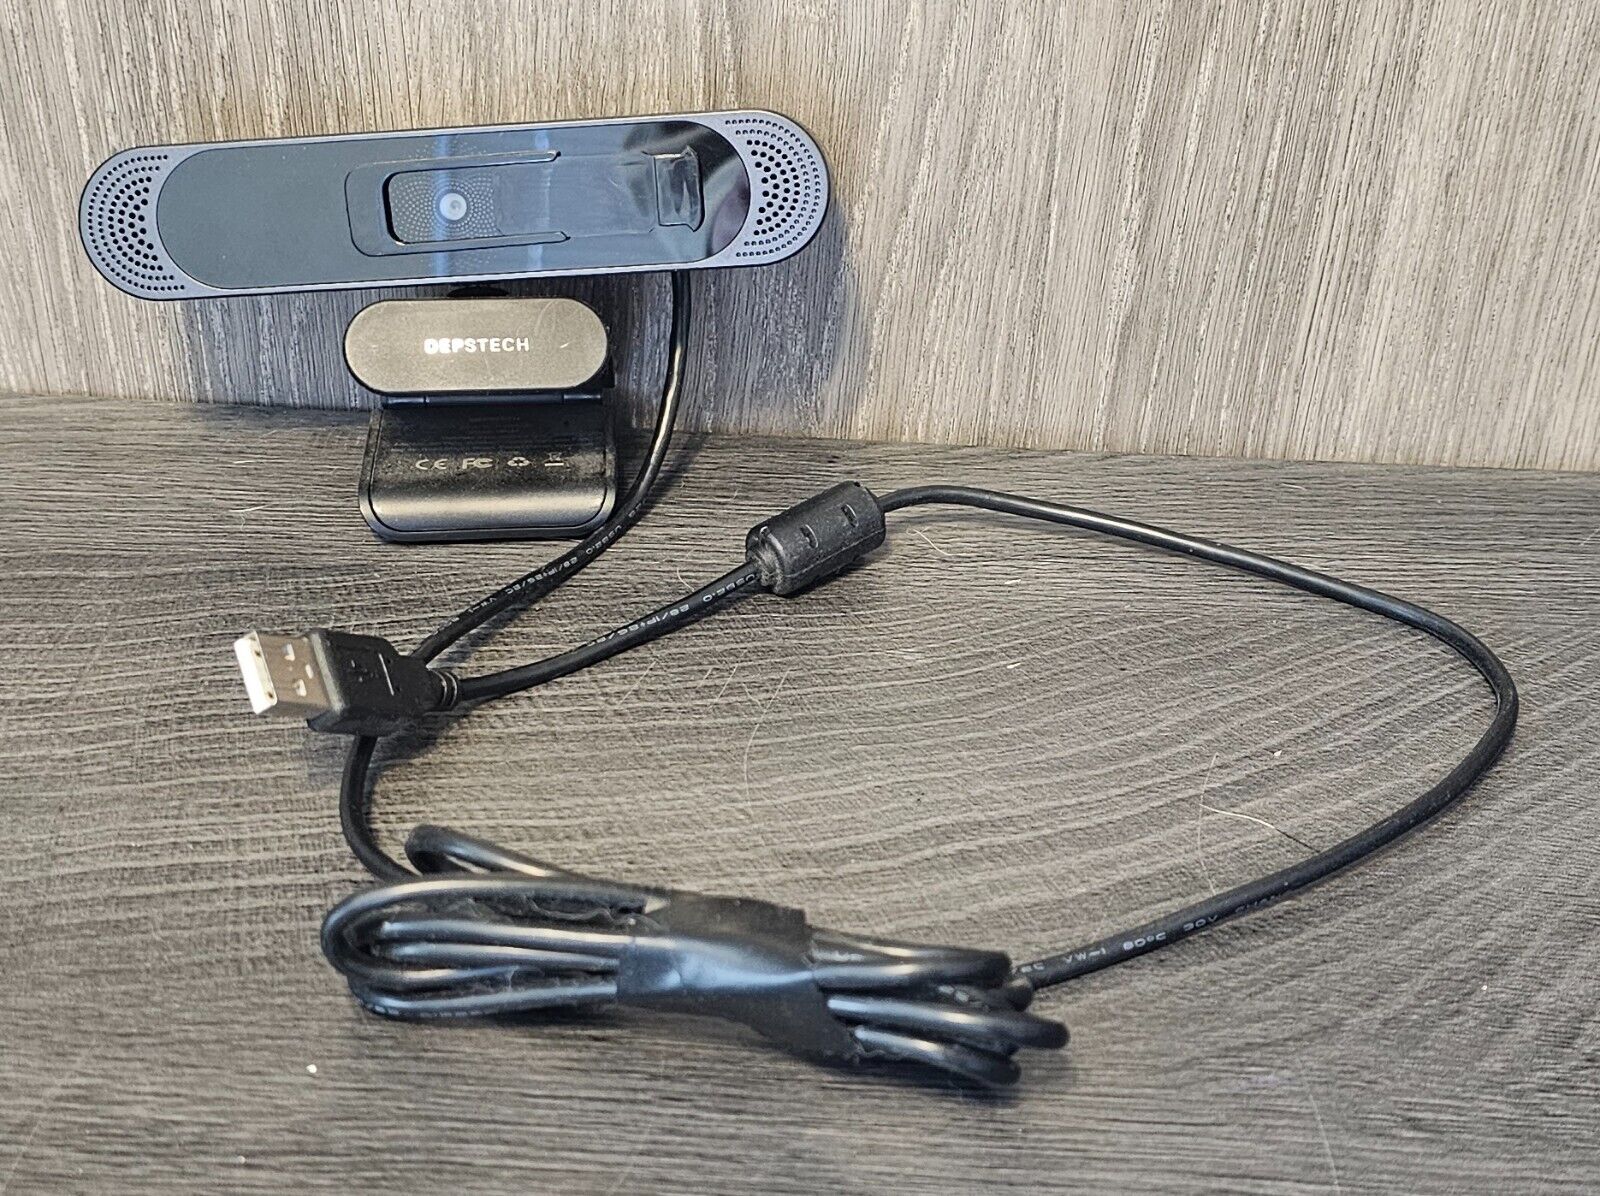 Depstech 4K USB Webcam with Built-In Mic